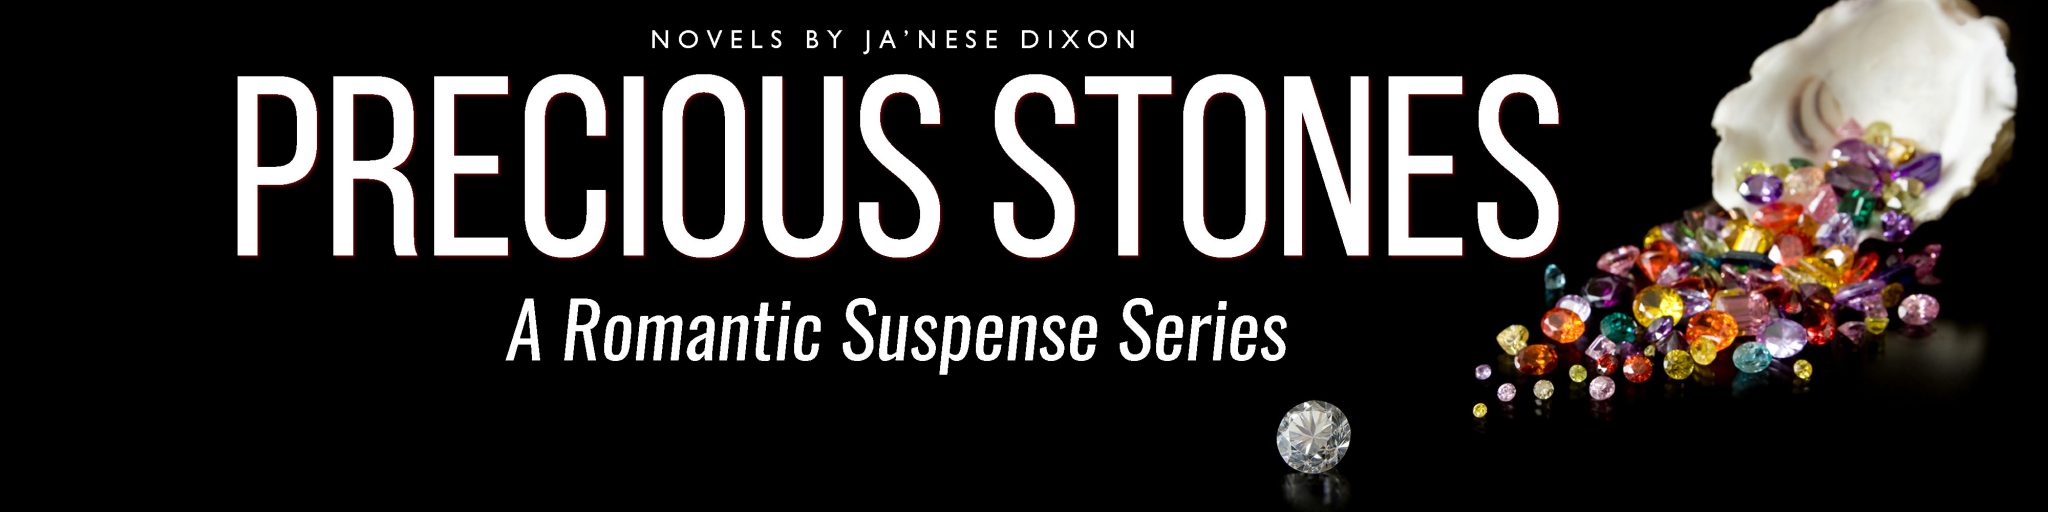 Precious Stones Series | Ja'Nese Dixon | Romantic Suspense Novels